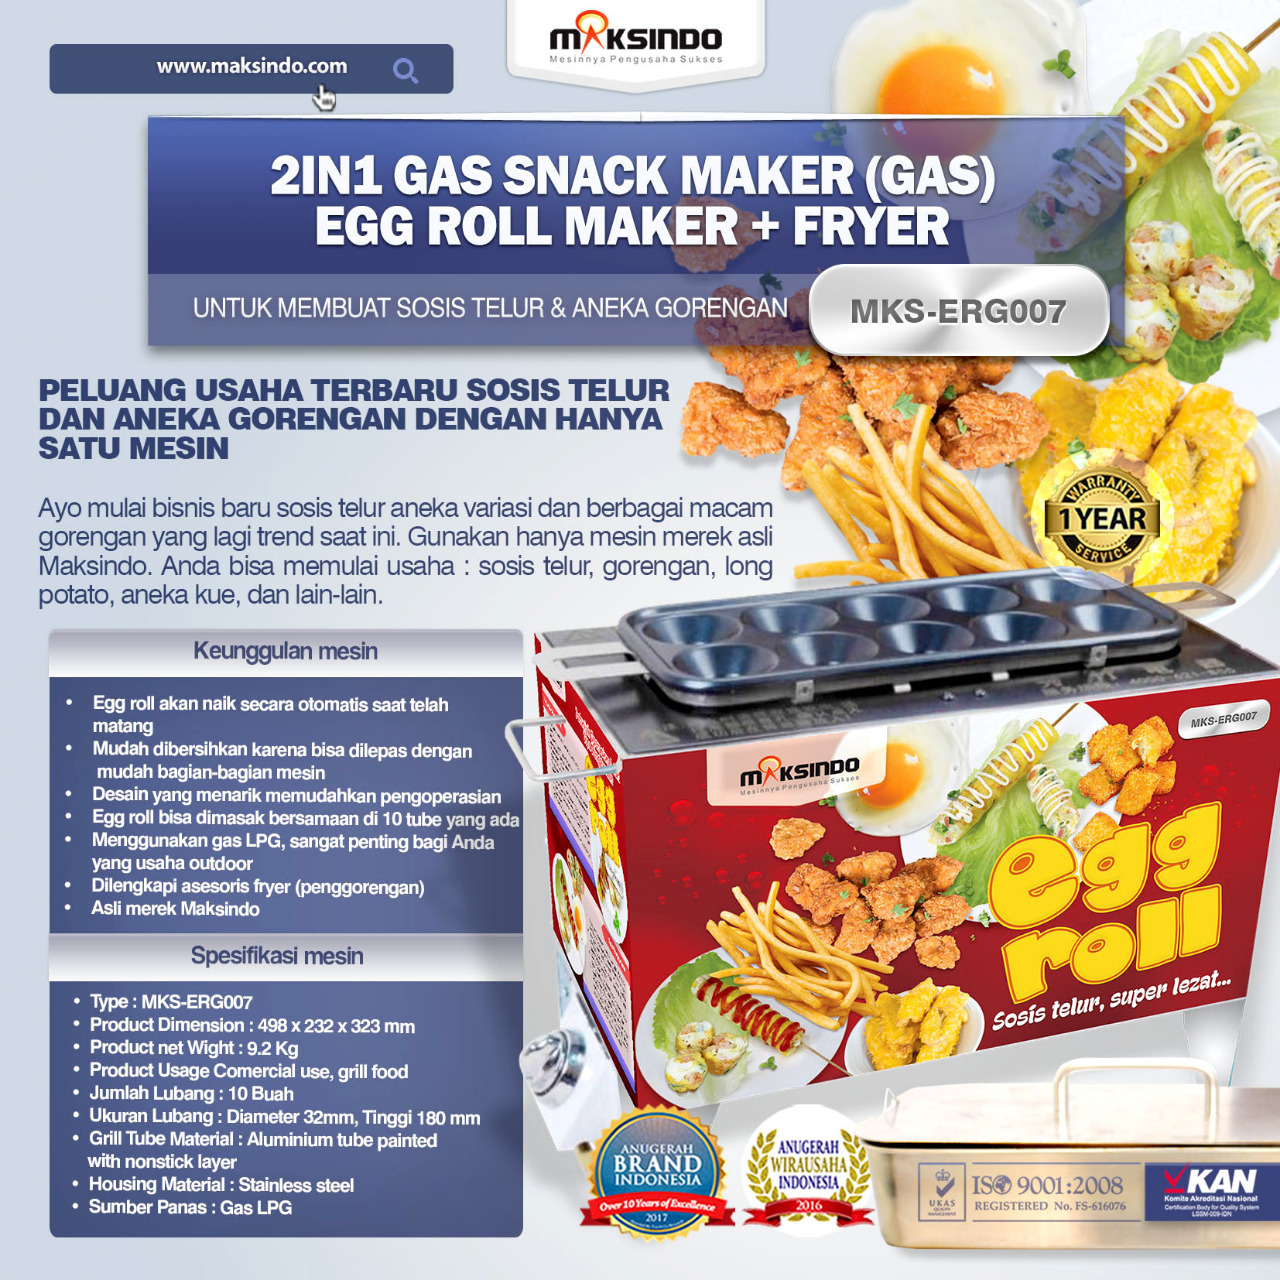 Jual Mesin Egg Roll Gas 2in1 Plus Fryer ERG007 Maksindo di Jakarta